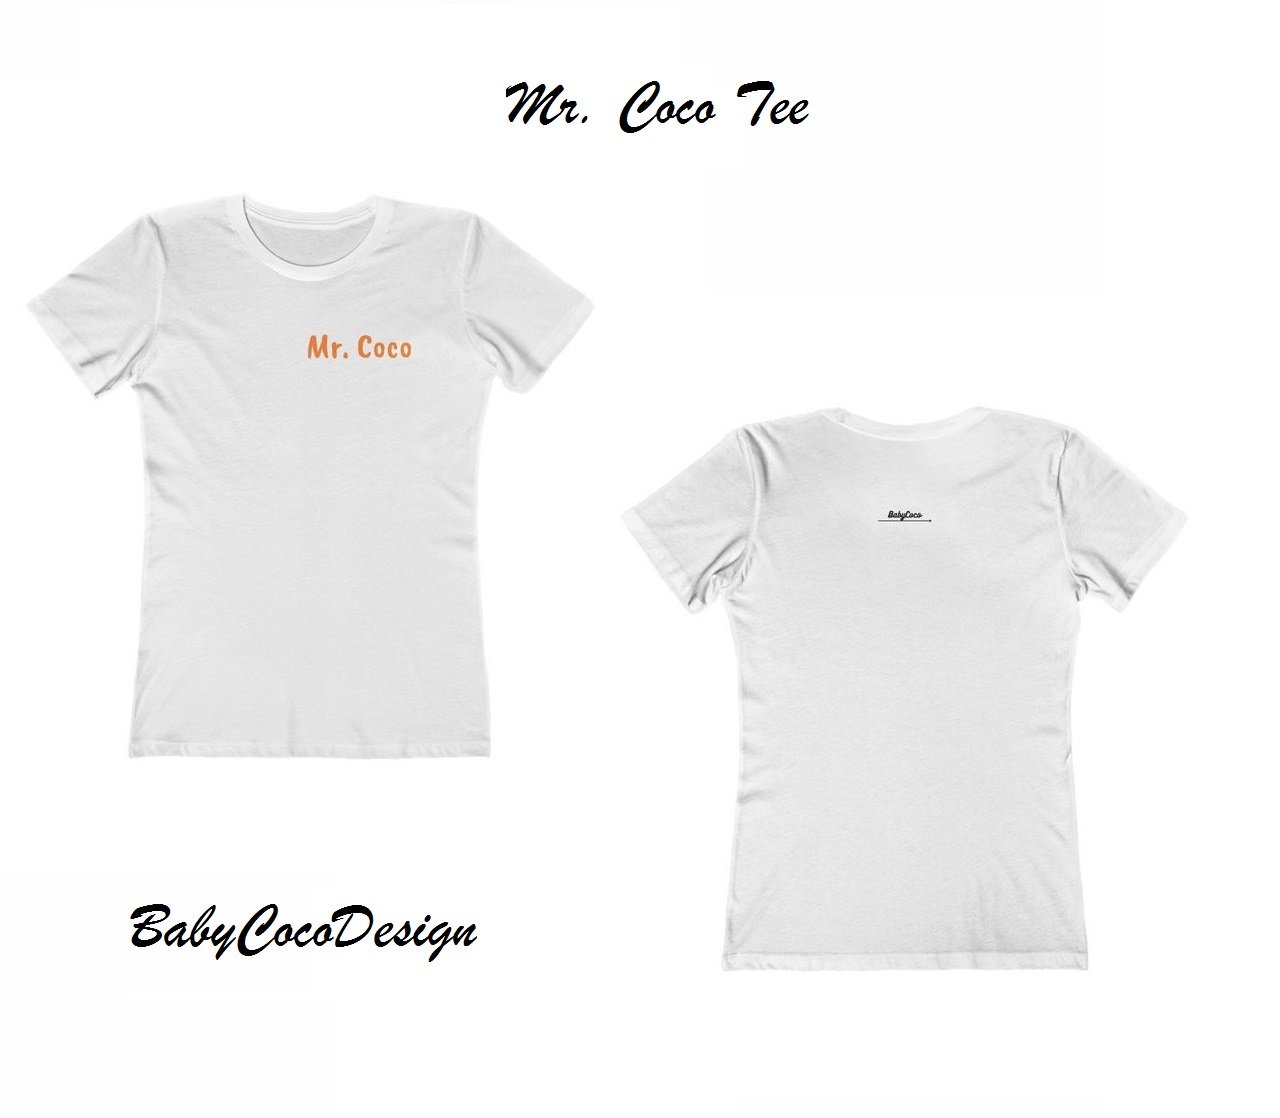 BabyCocoDesign Mr. Coco Tee Shirt - White / Orange, Size S